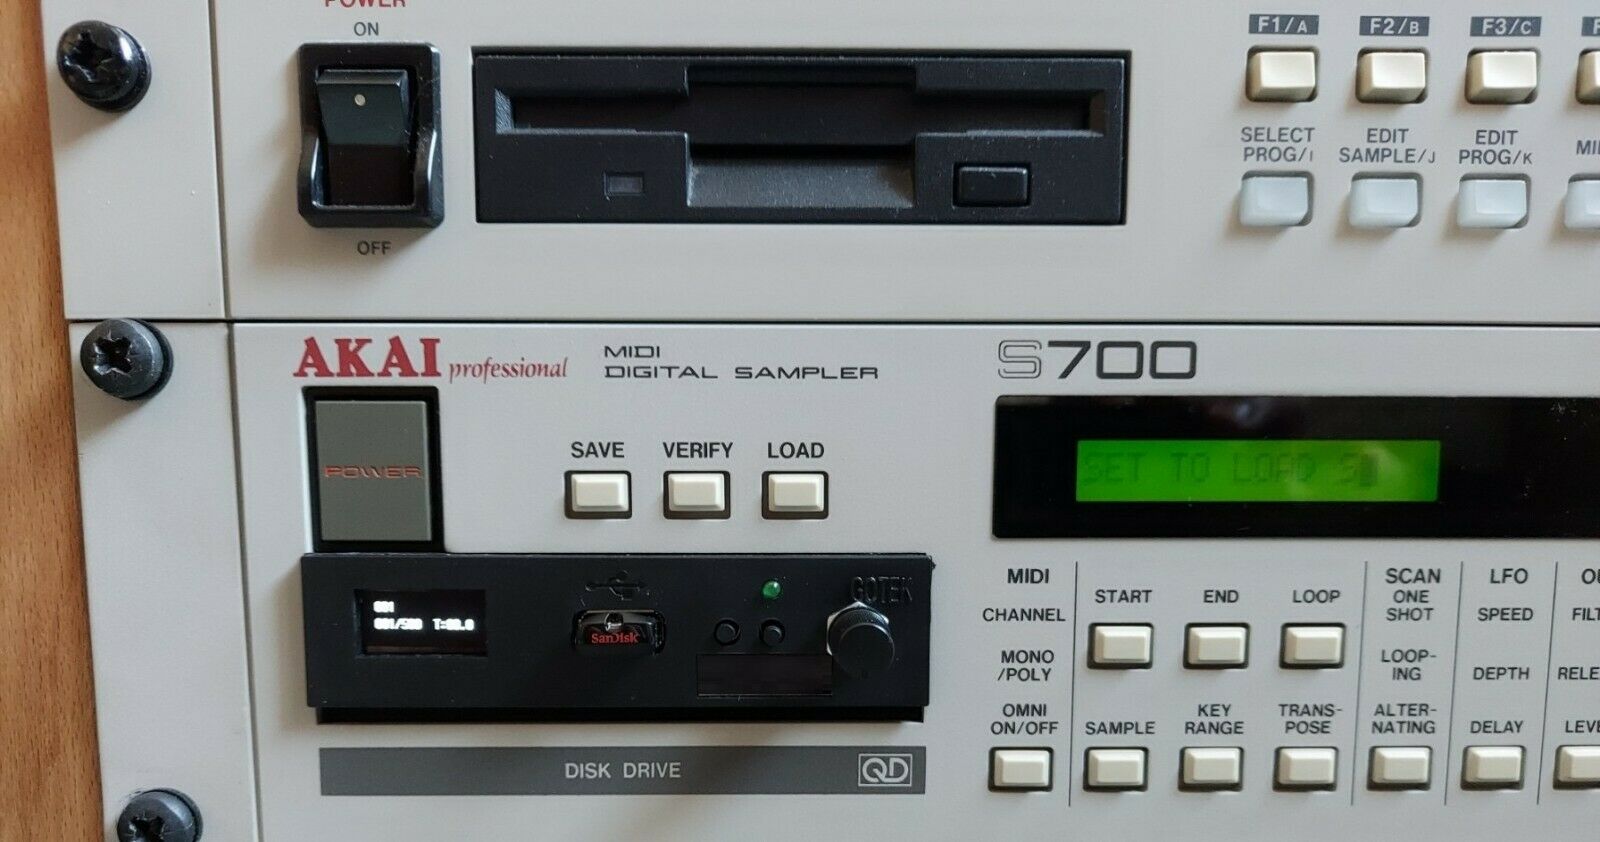 USB Floppy Emulator with 2160 Disks for AKAI x7000 s700 quickdisk USB QD s-700 